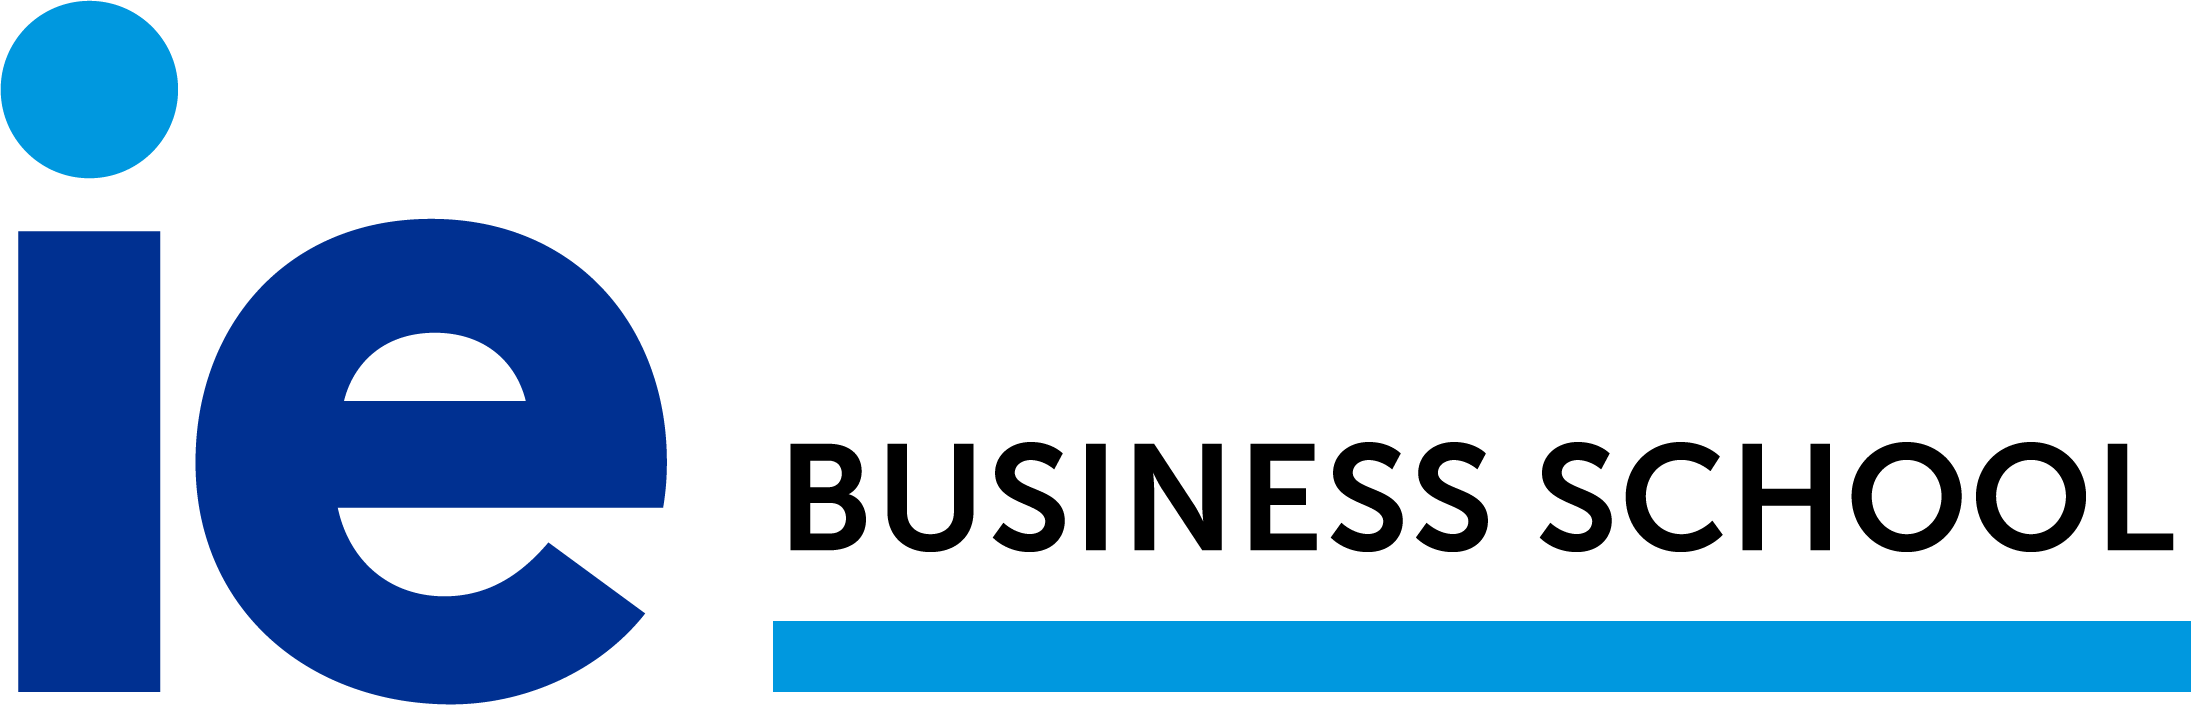 IE Logo - IE Business School Logo.png